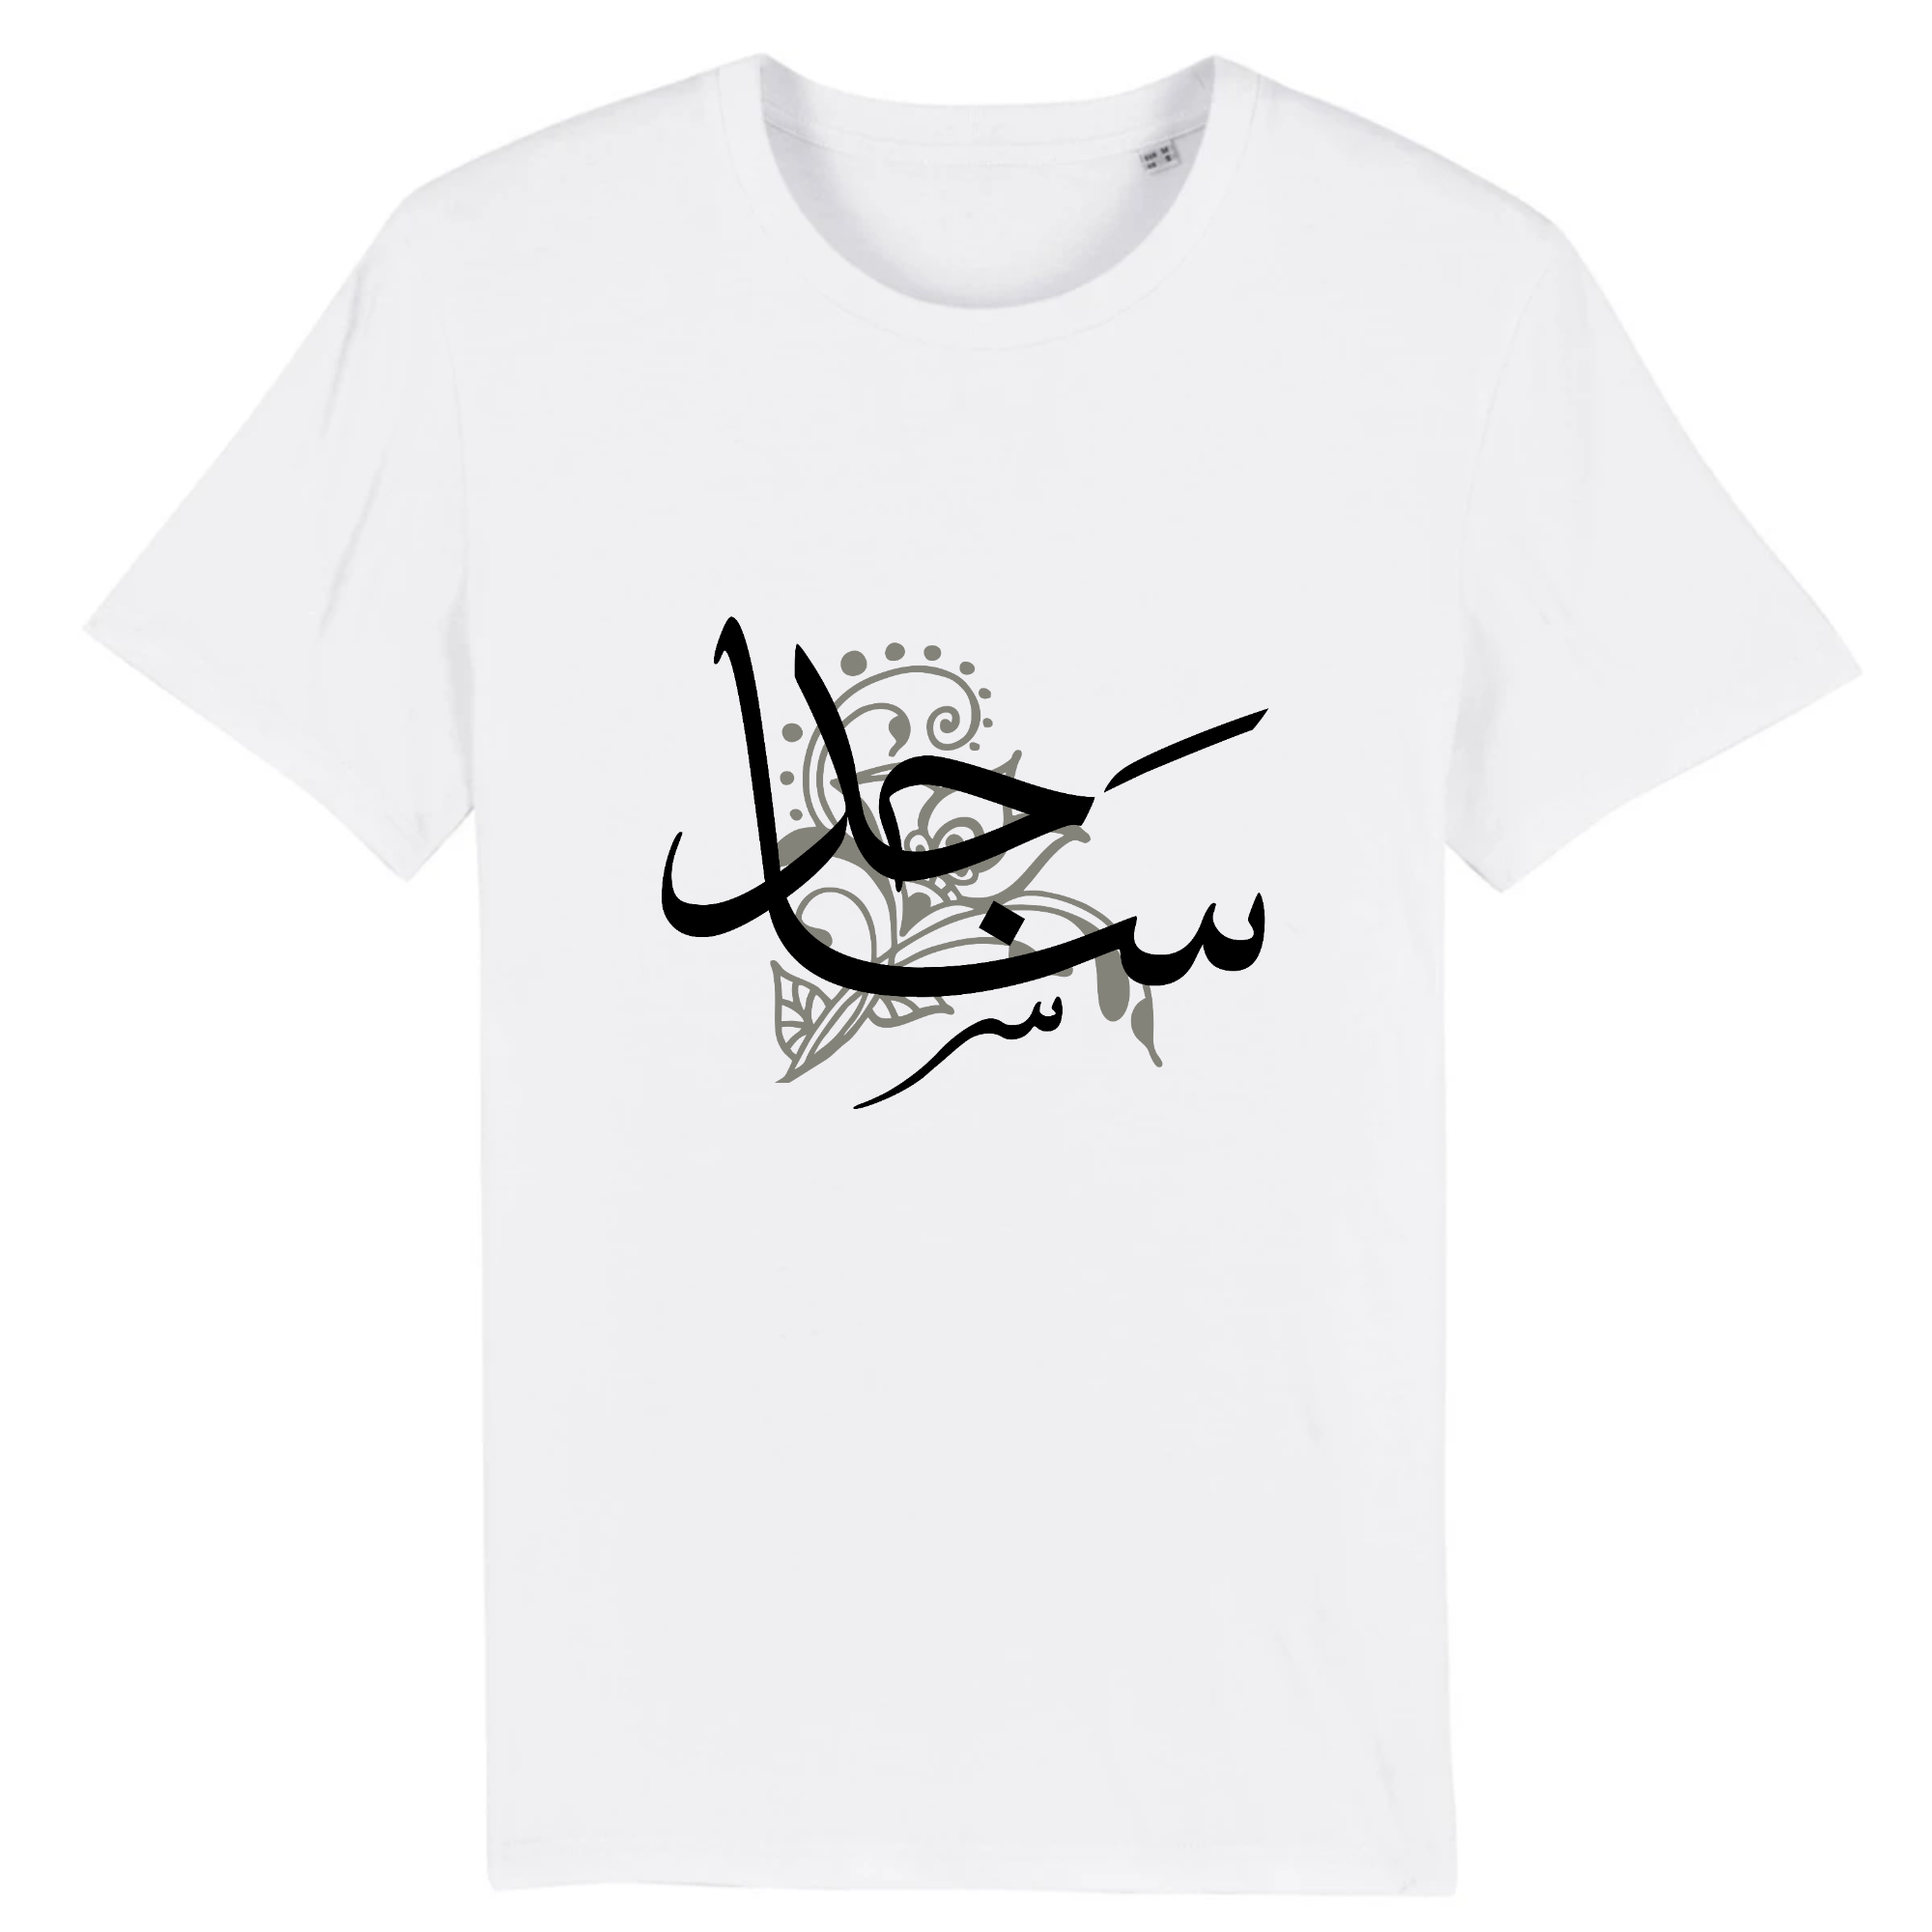 Sajid - T-shirt Calligraphie Arabe